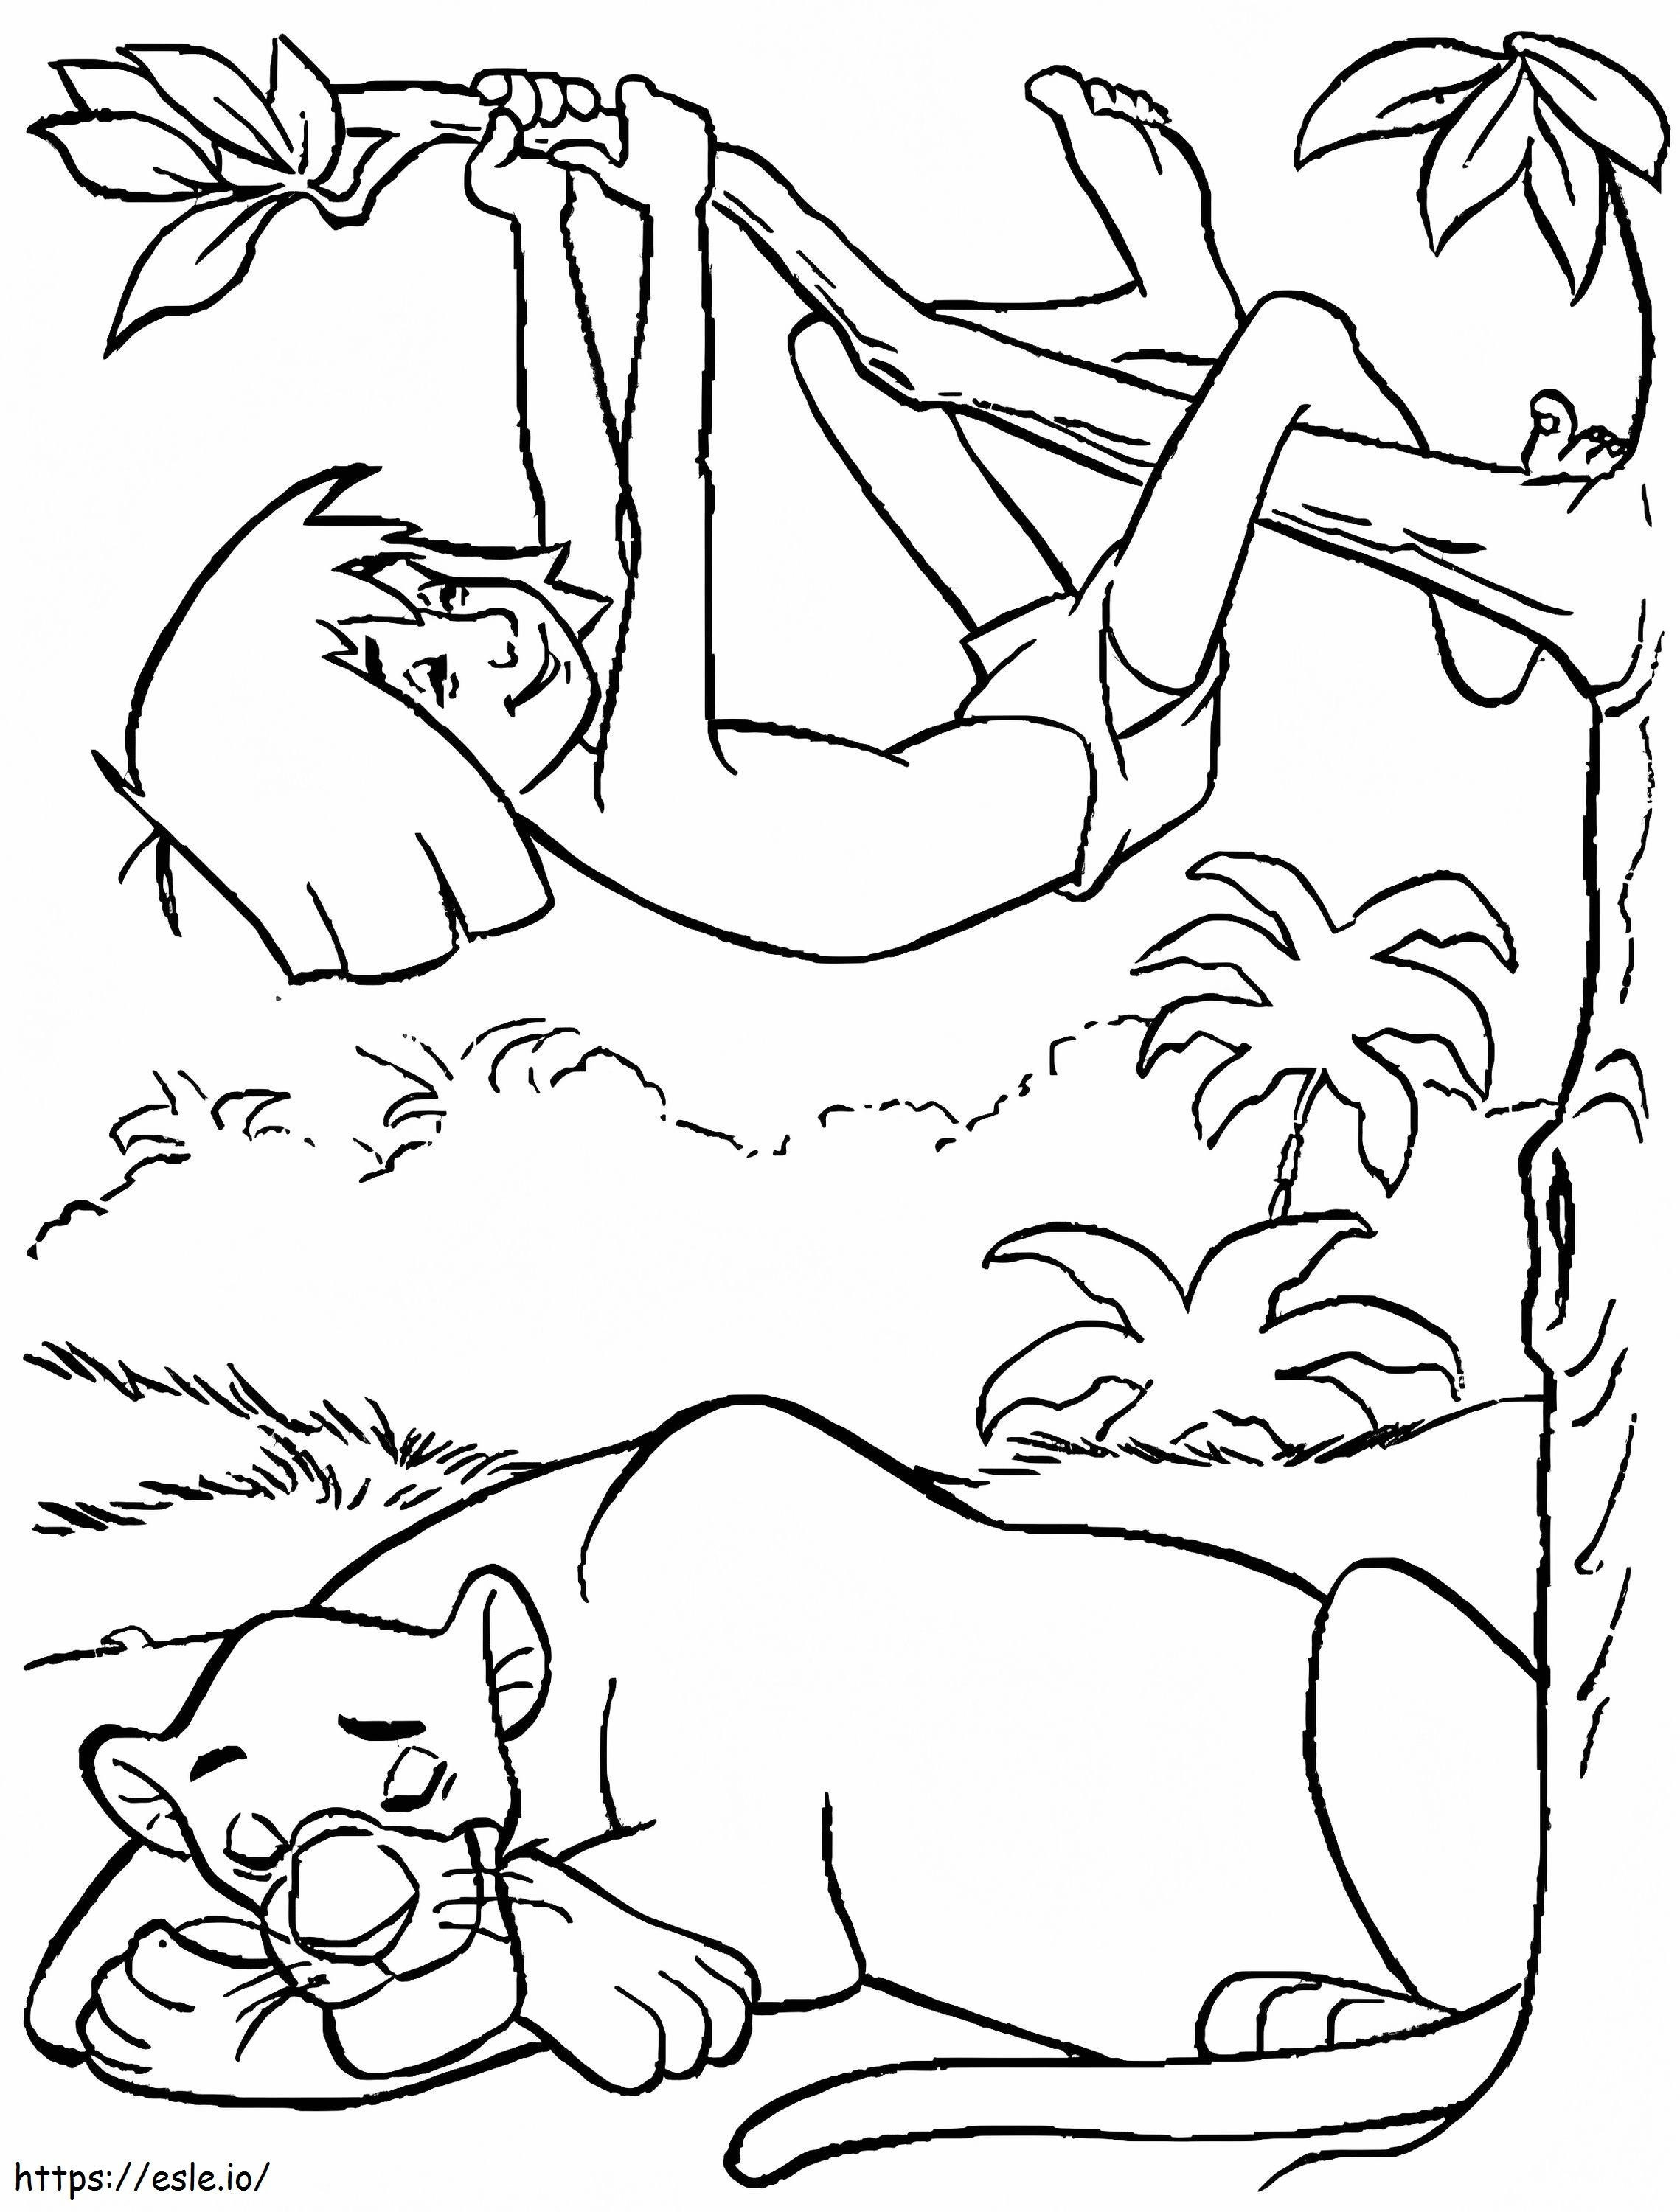 Bagheera Sleeping And Climbing Mowgli coloring page